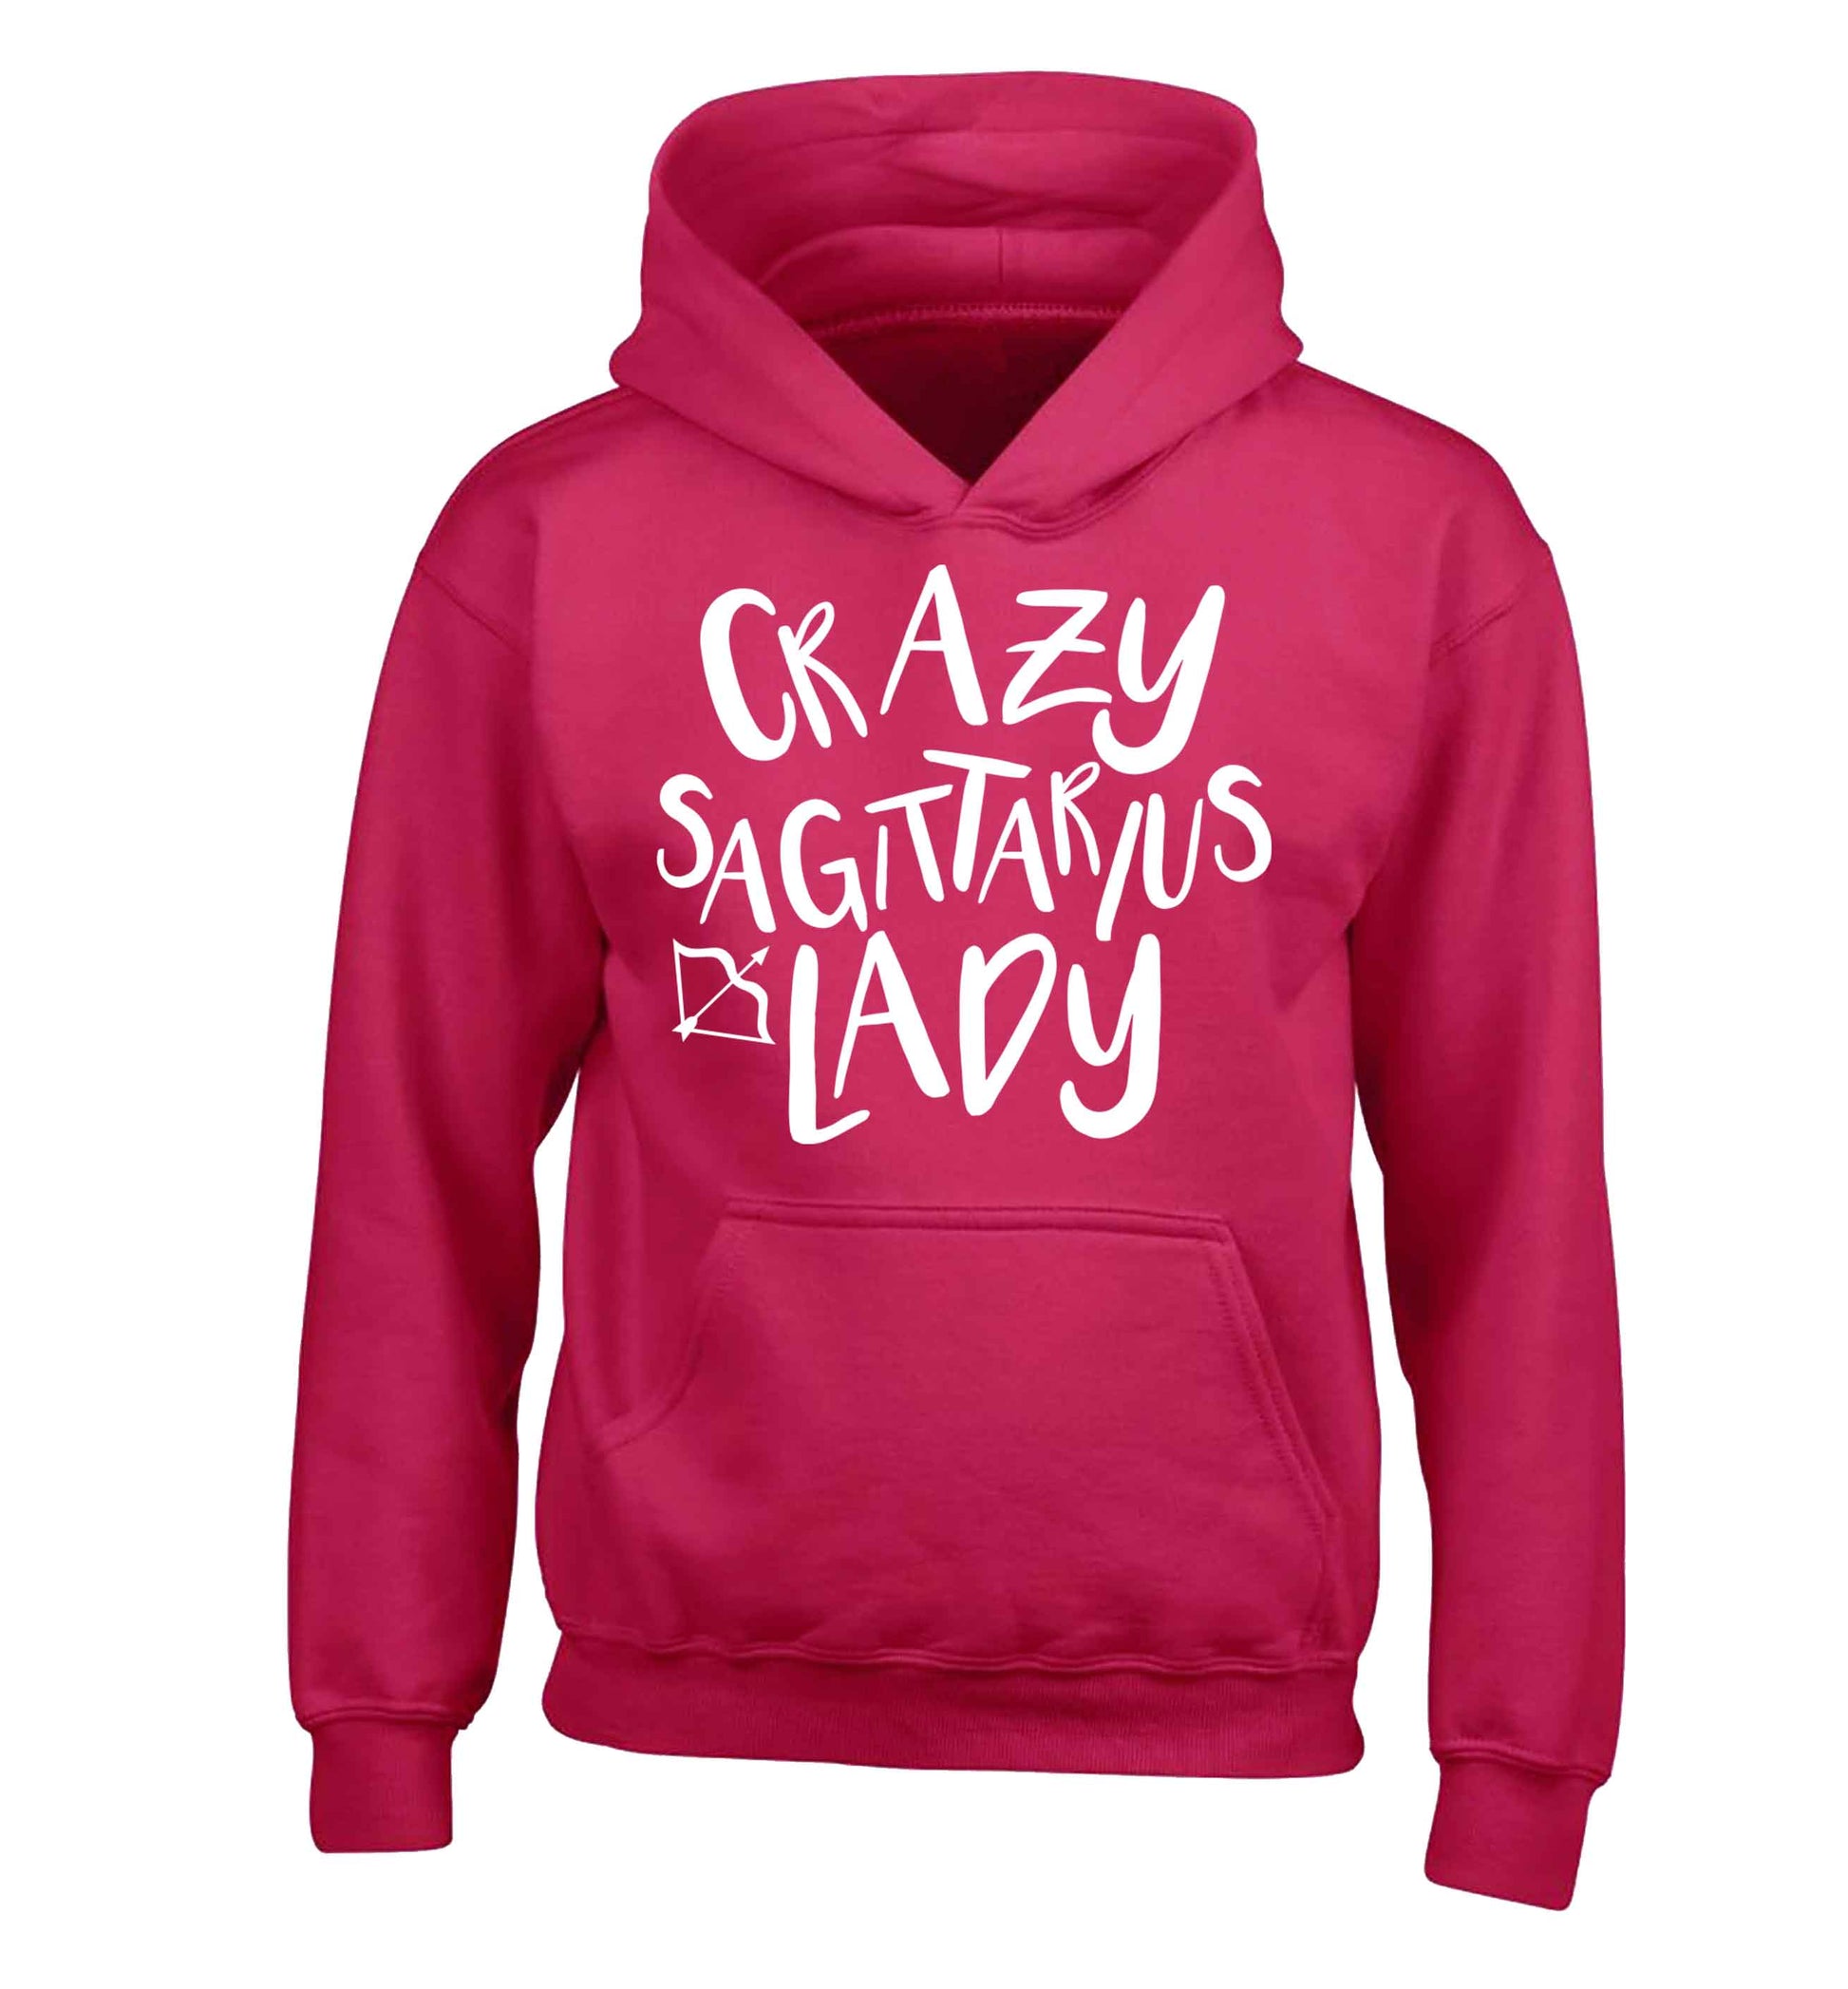 Crazy sagittarius lady children's pink hoodie 12-13 Years